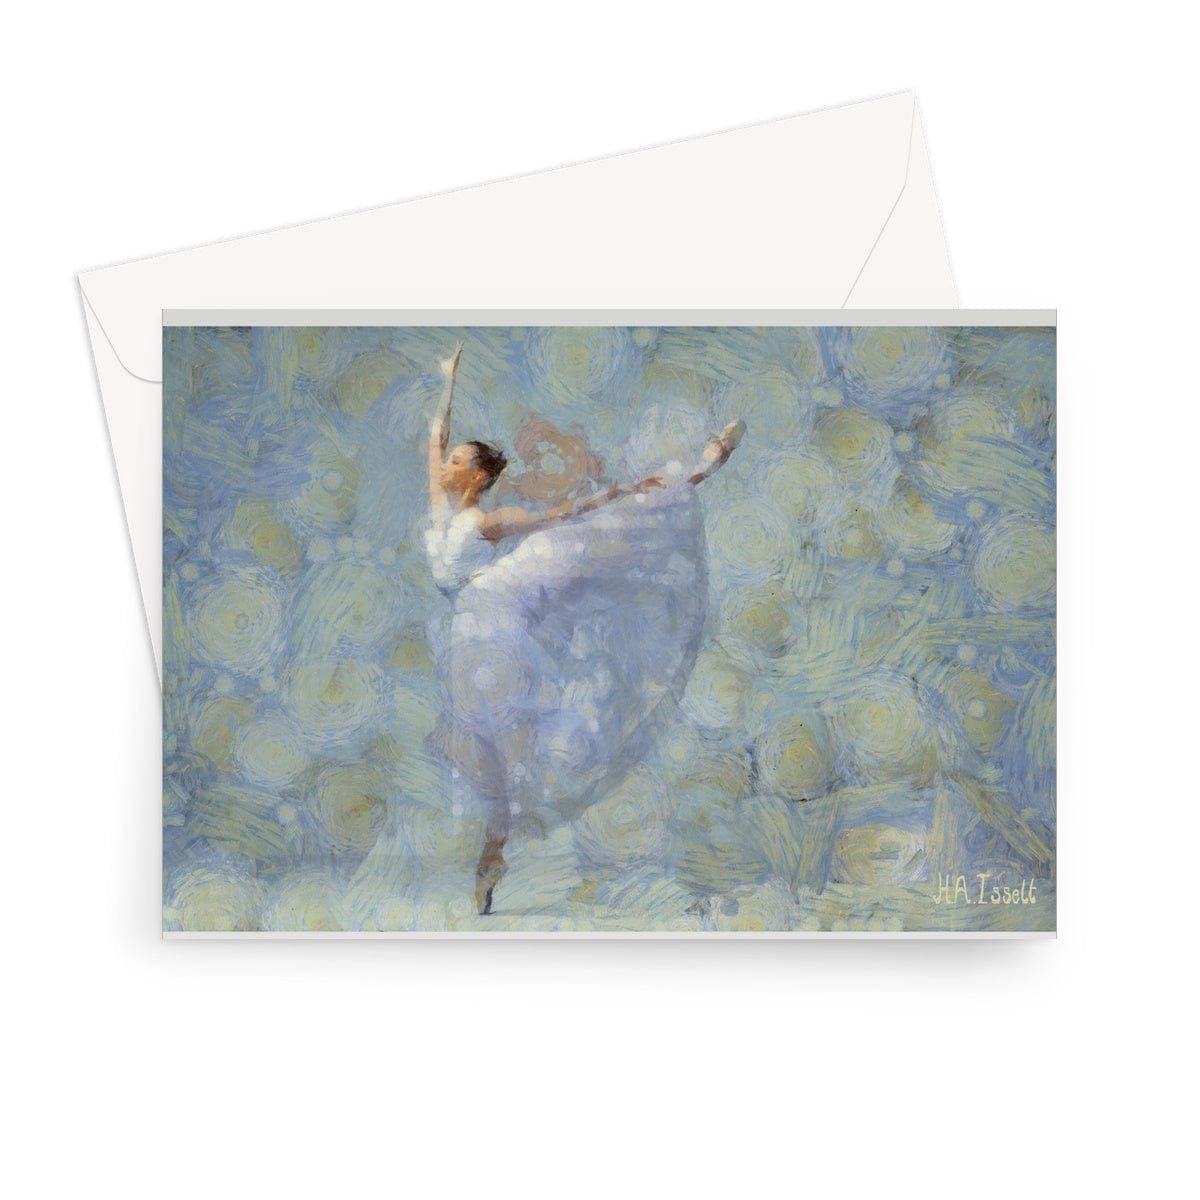 Dreamy Ballerina Greeting Card